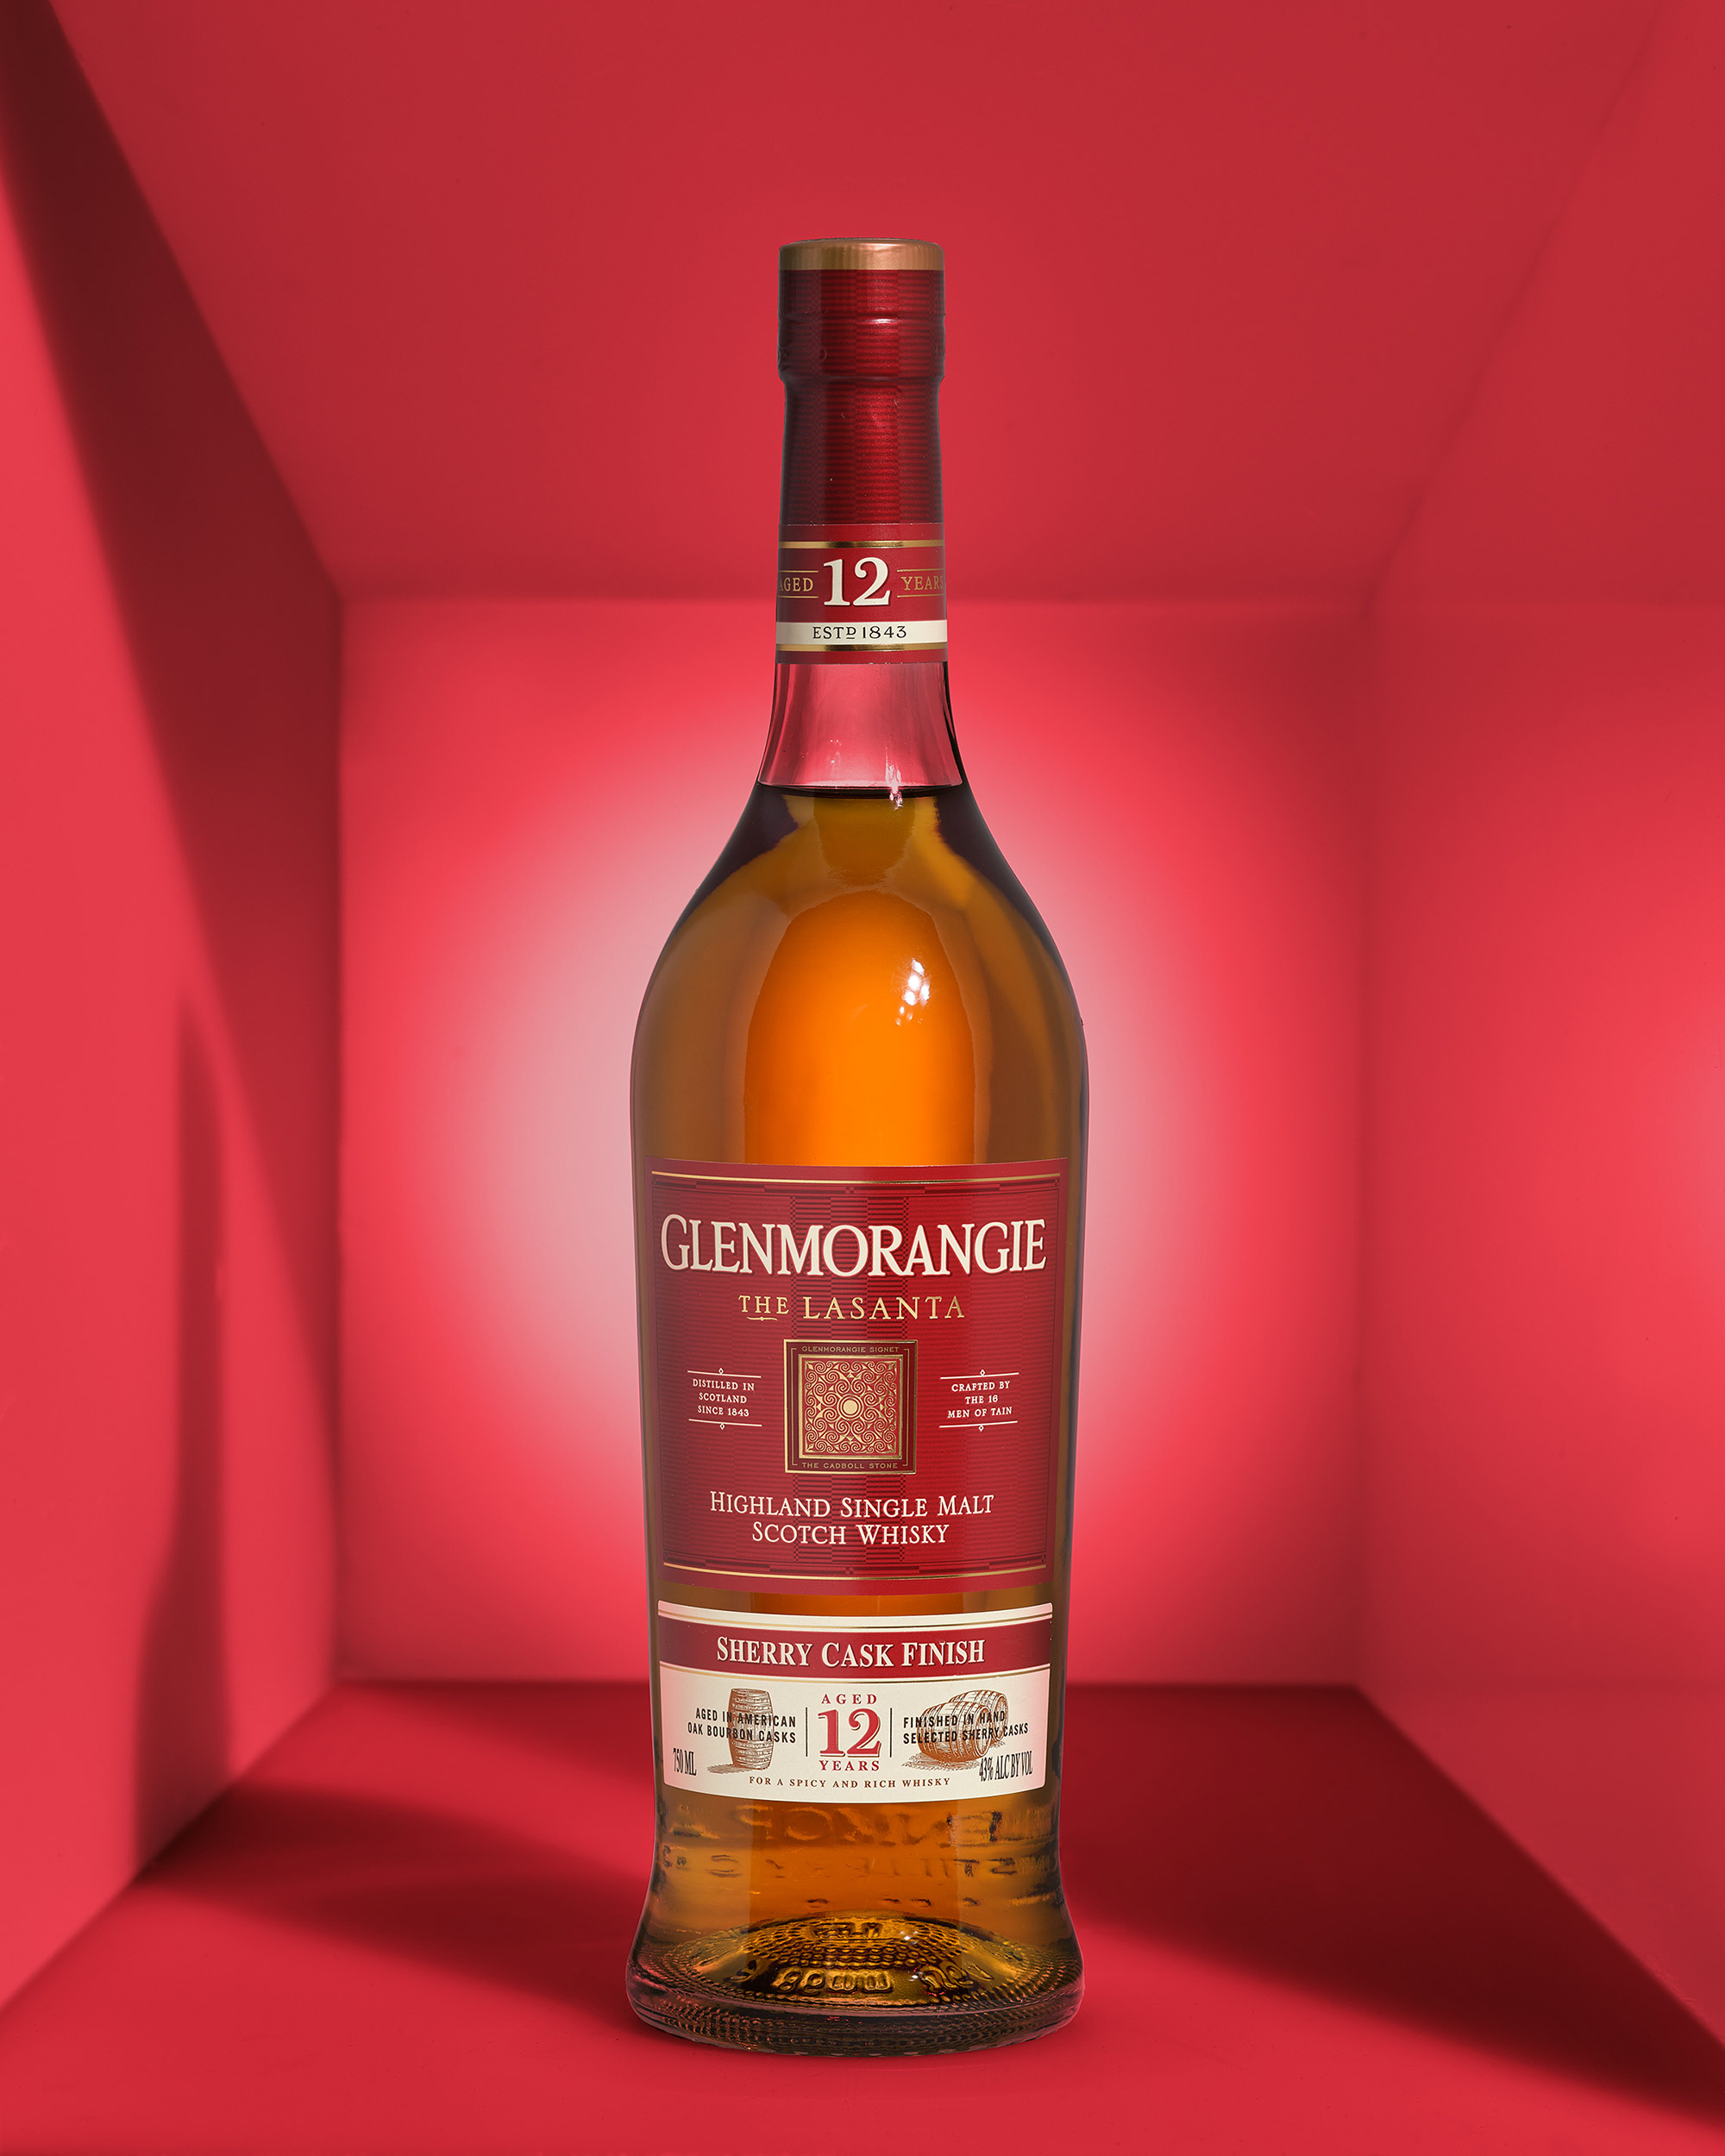 Glenmorangie The Lasanta Scotch Whisky, Scotch Whisky, New York NY, Craig LaCourt Commercial Photographer